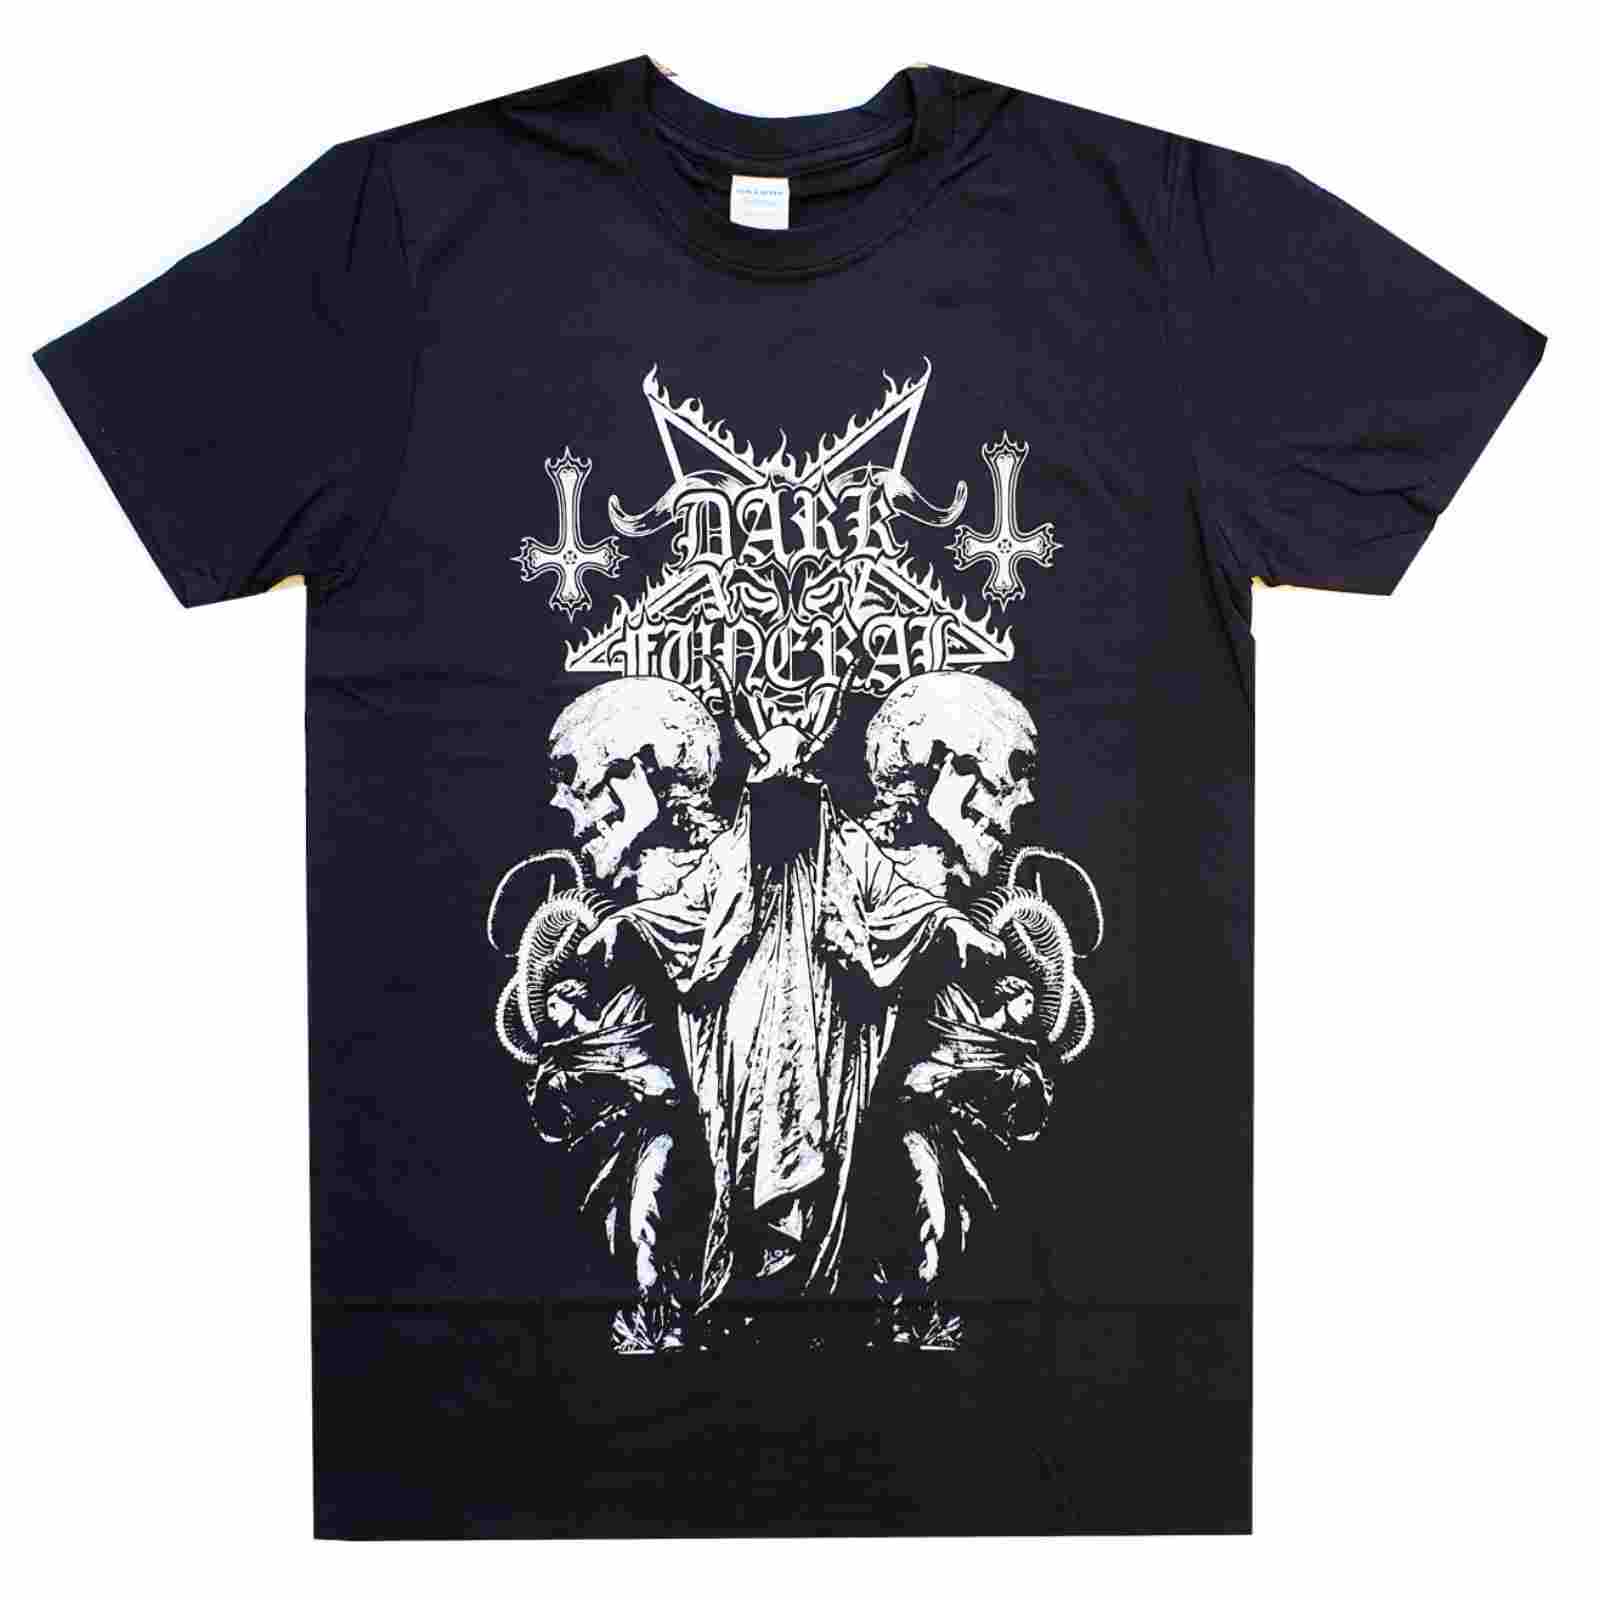 Dark Funeral Shadows Over Oceania Tour Shirt